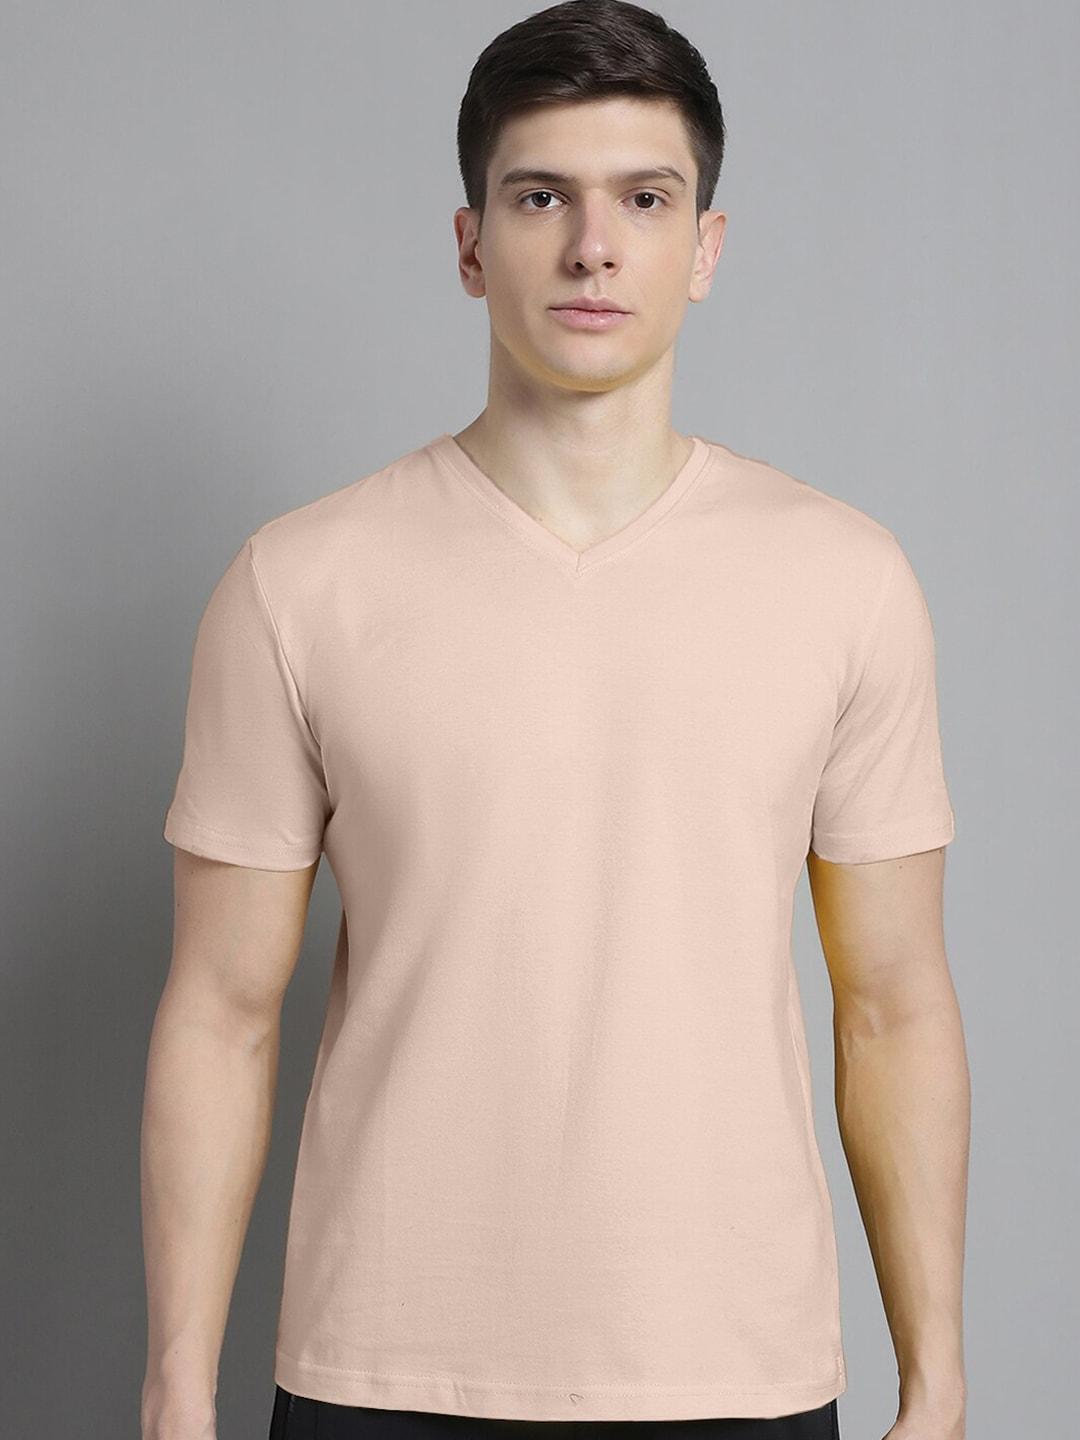 fbar-v-neck-short-sleeves-slim-fit-pure-cotton-t-shirt